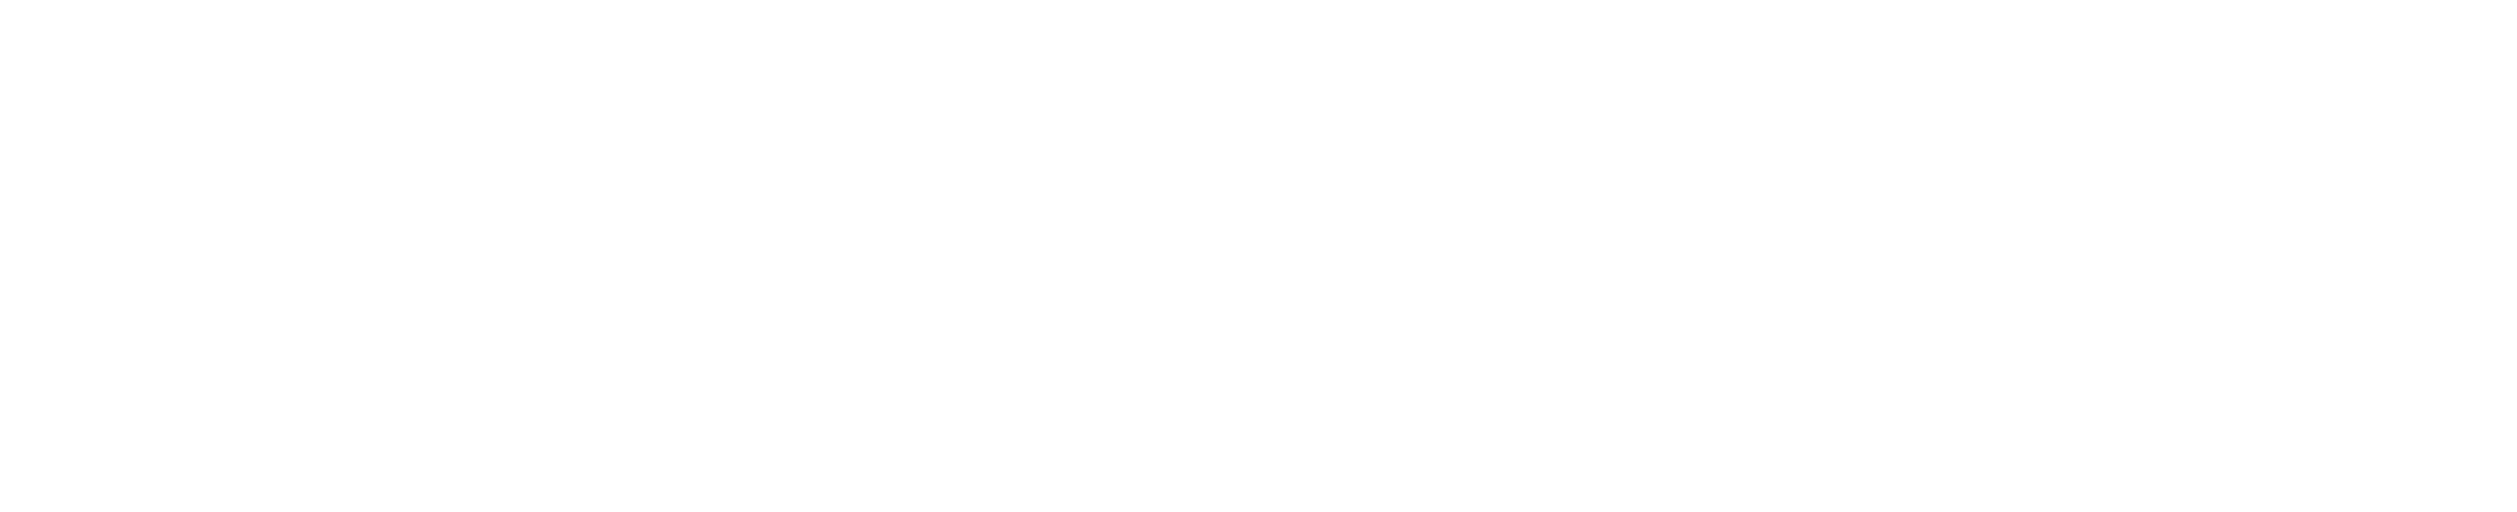 WordPress-logo-White